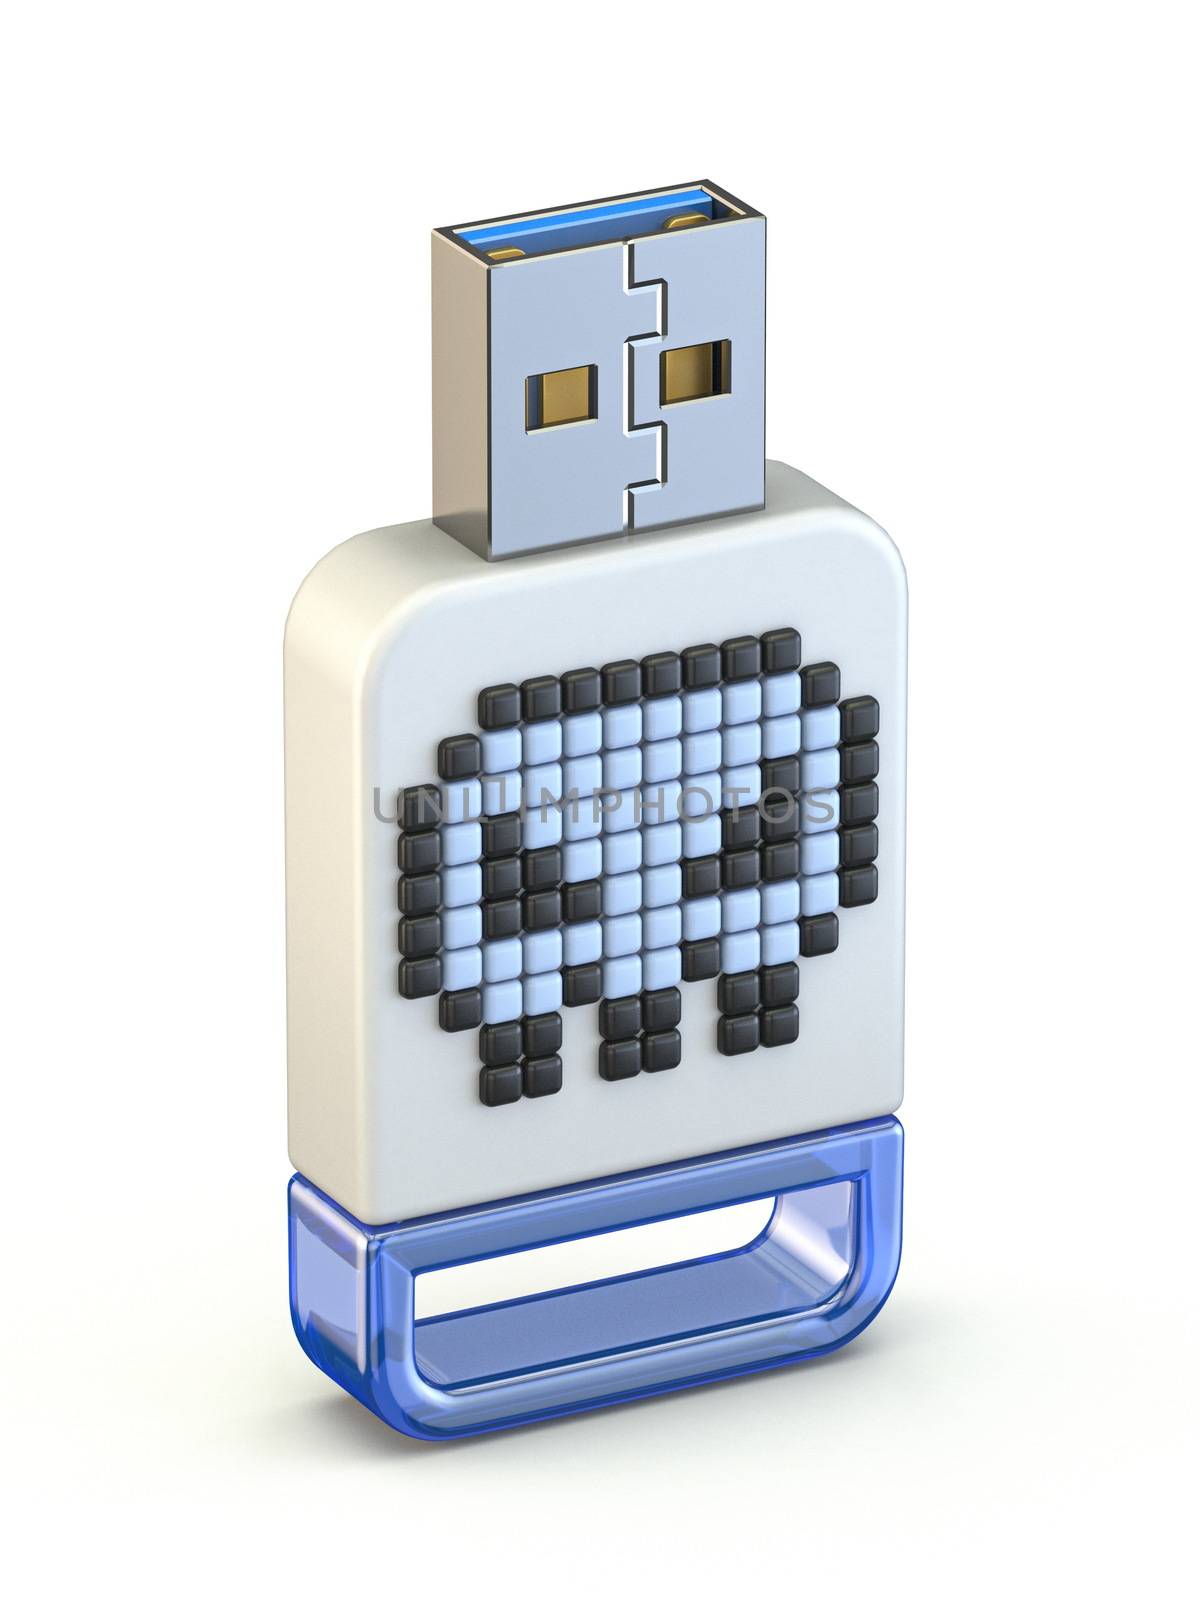 Skull sign on vertical USB memory stick 3D render illustration isolated on white background